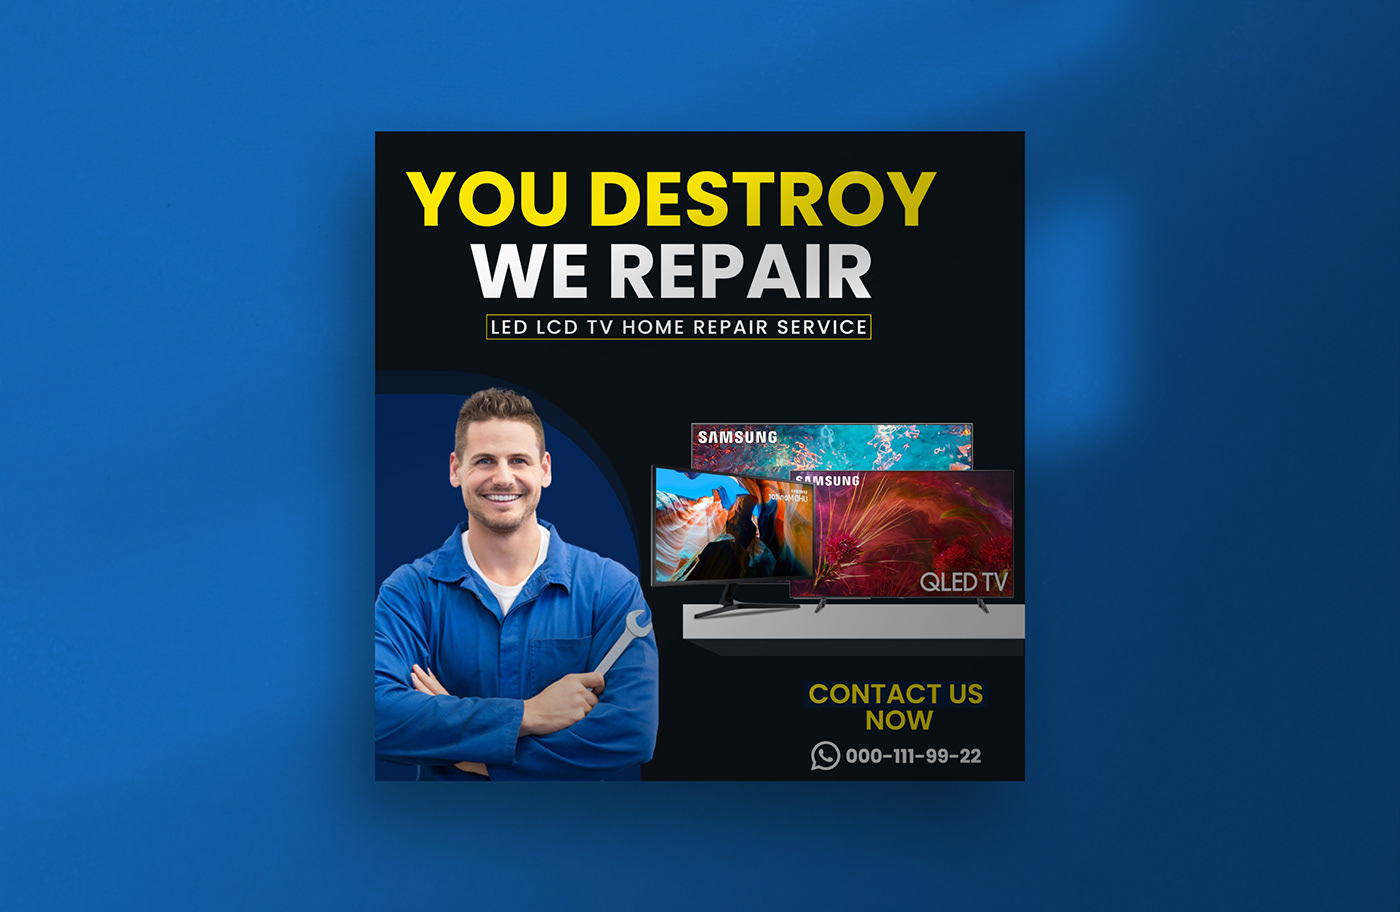 ads Advertising  Electronics home appliances Repair techniques Social media post technical skills Tv Repair